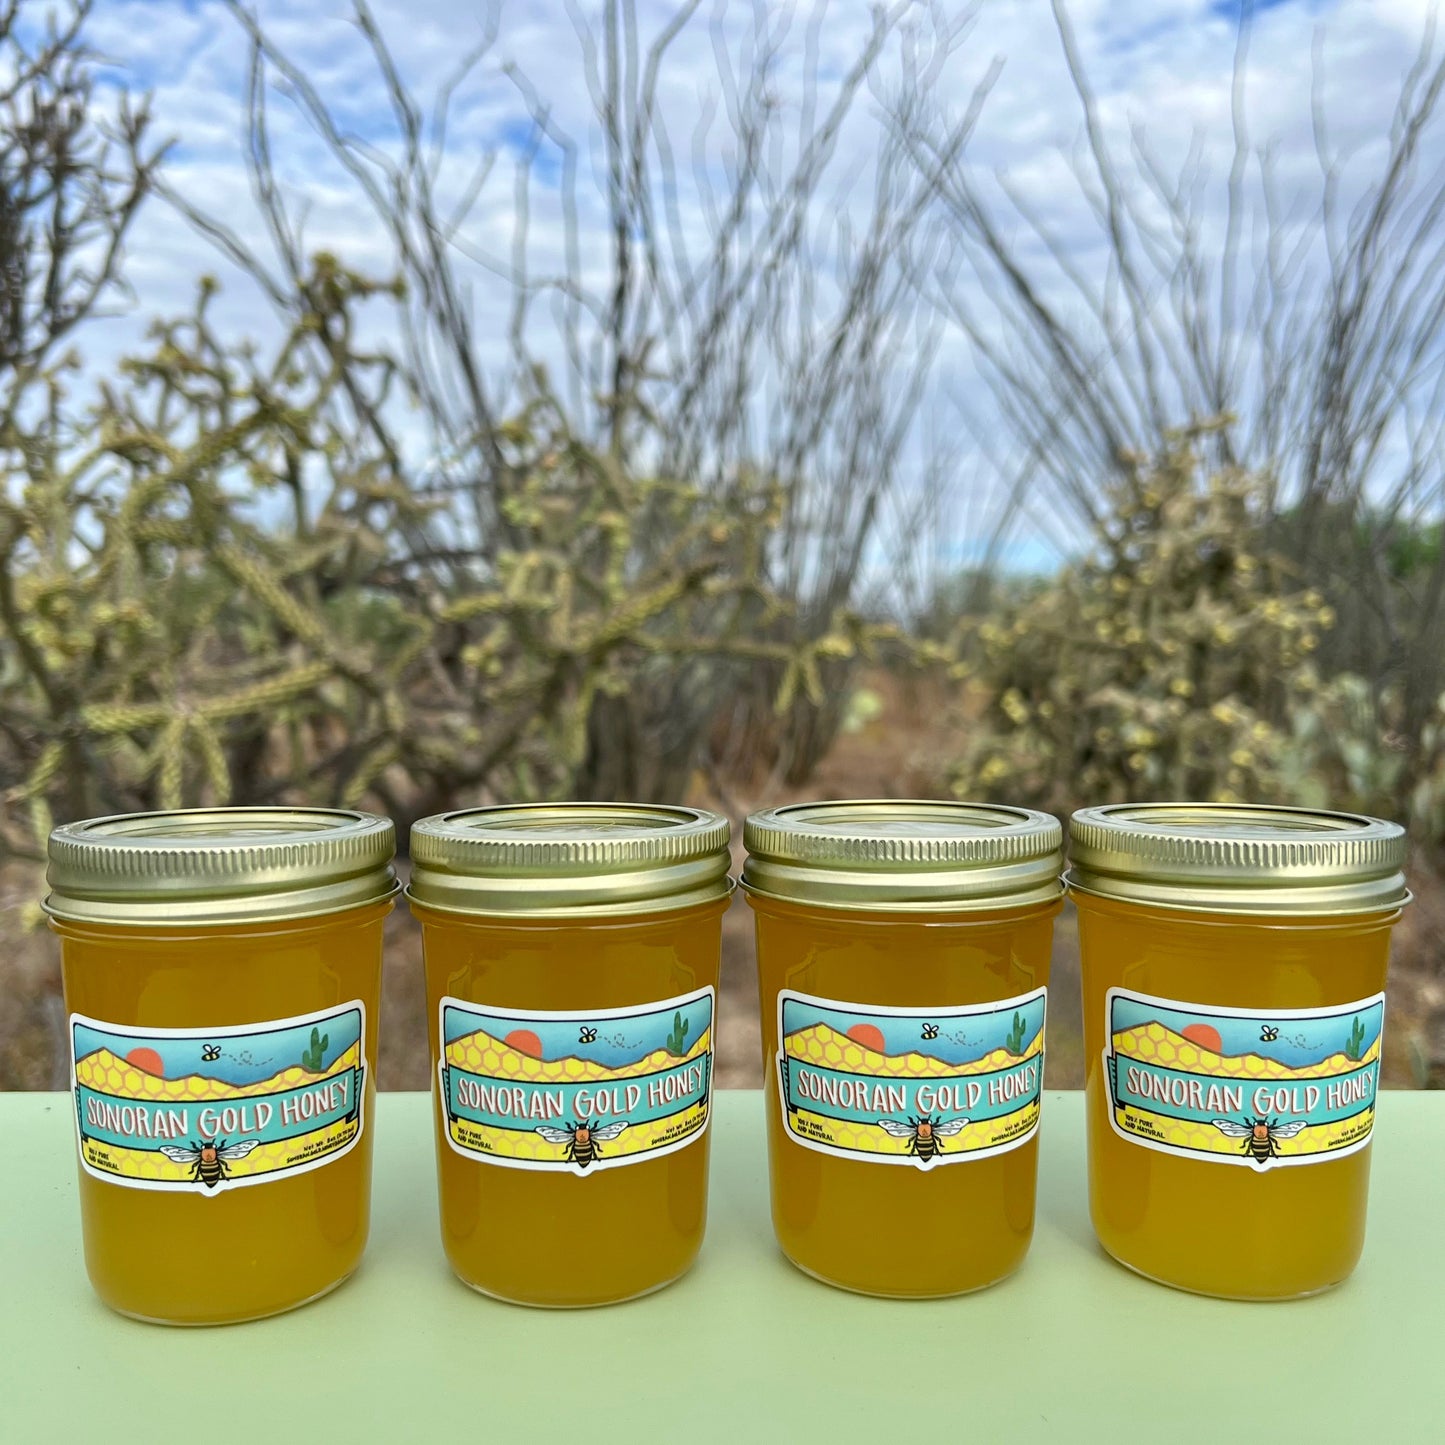 Four 8oz Jars of Sonoran Gold Honey